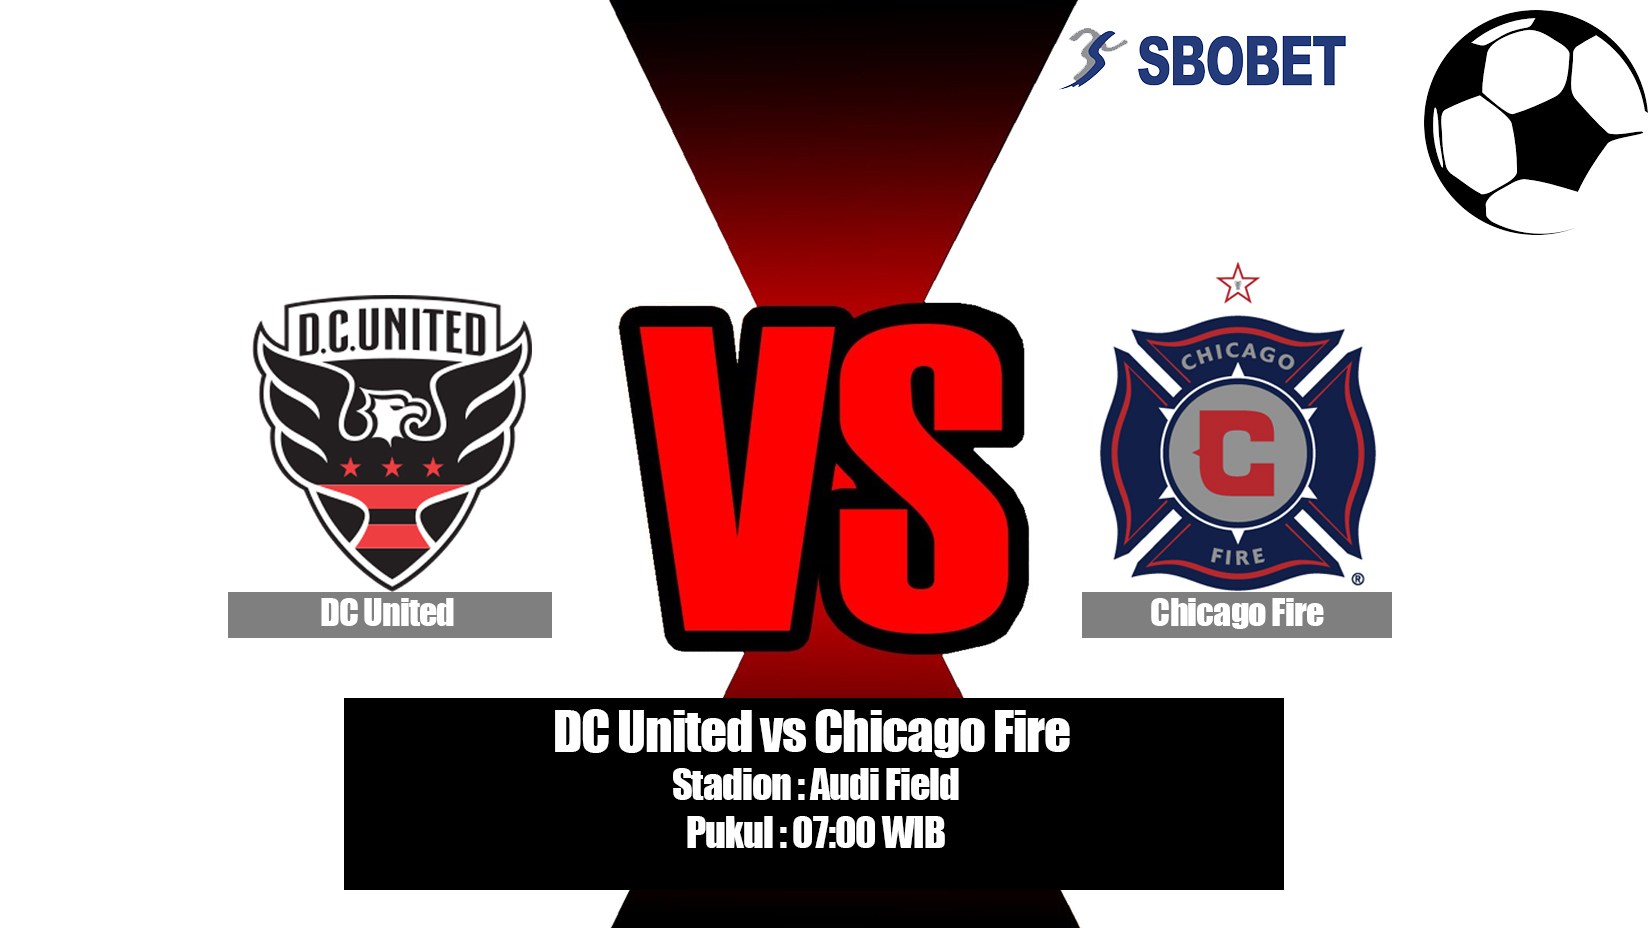 Prediksi Bola DC United vs Chicago Fire 30 Mei 2019Prediksi Bola DC United vs Chicago Fire 30 Mei 2019